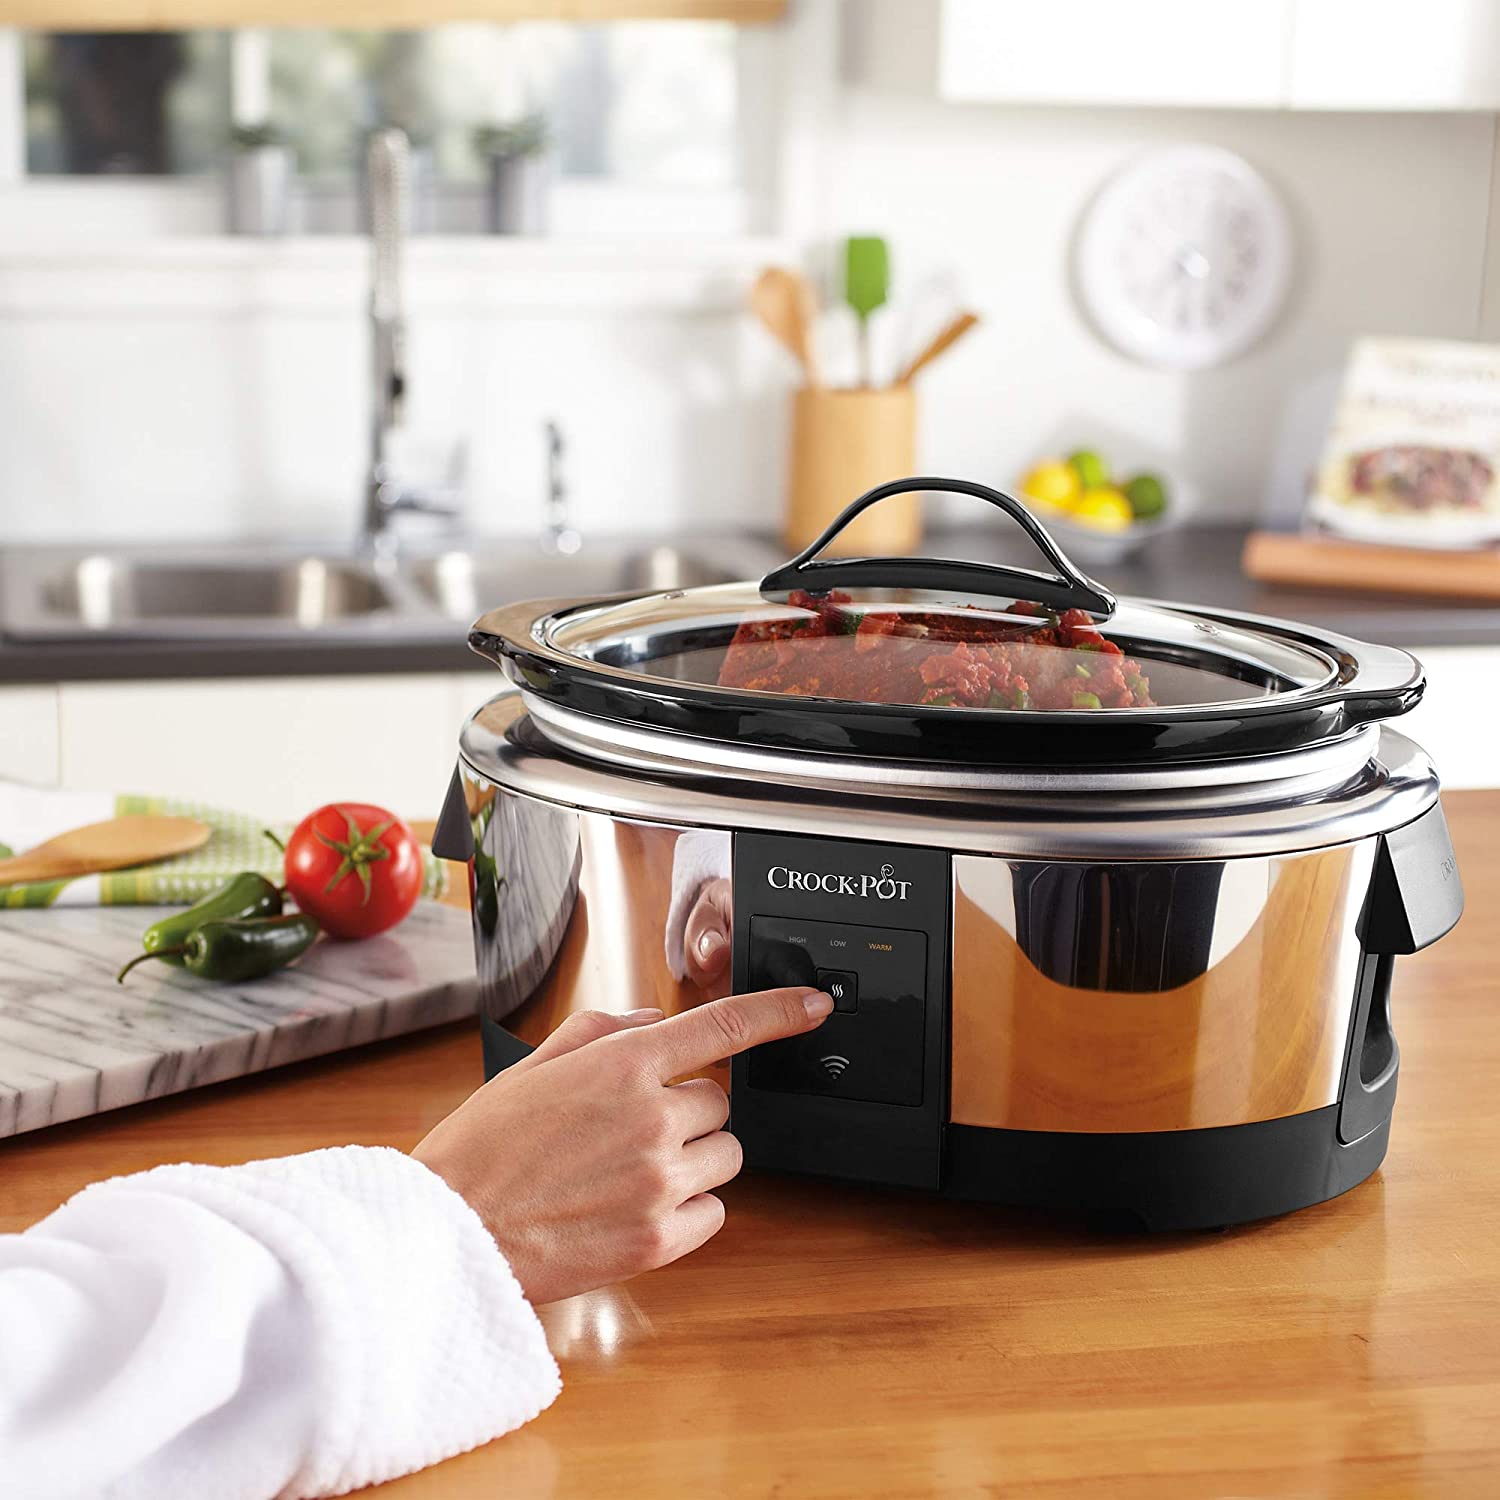  Crock-Pot Smart-Pot 6 Quart Programmable Slow Cooker